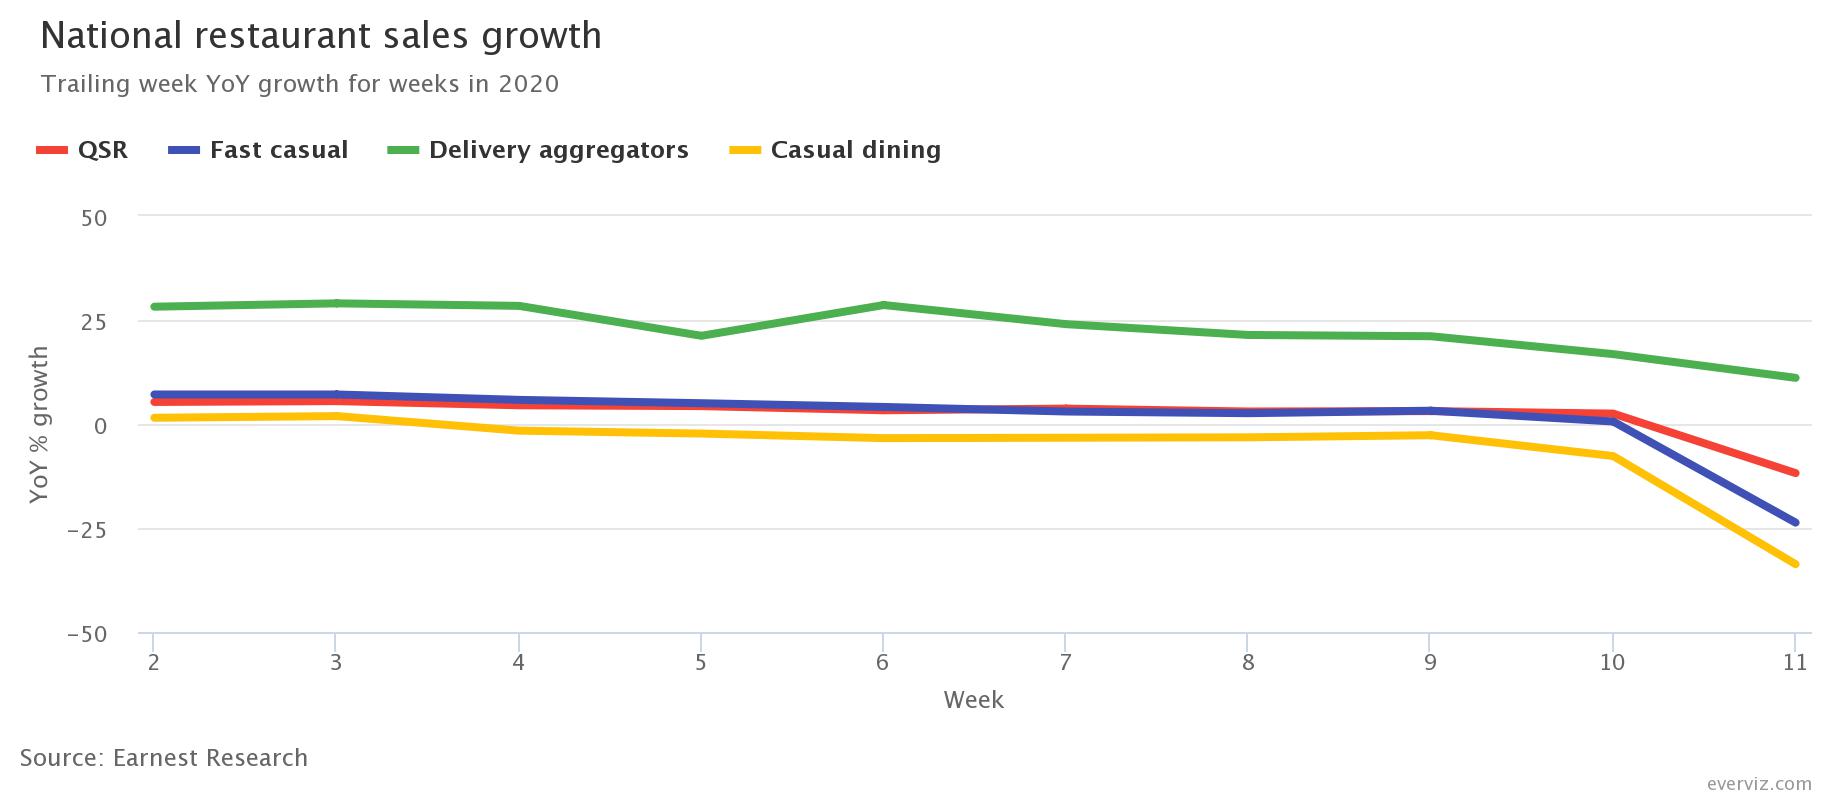 National restaurant sales growth